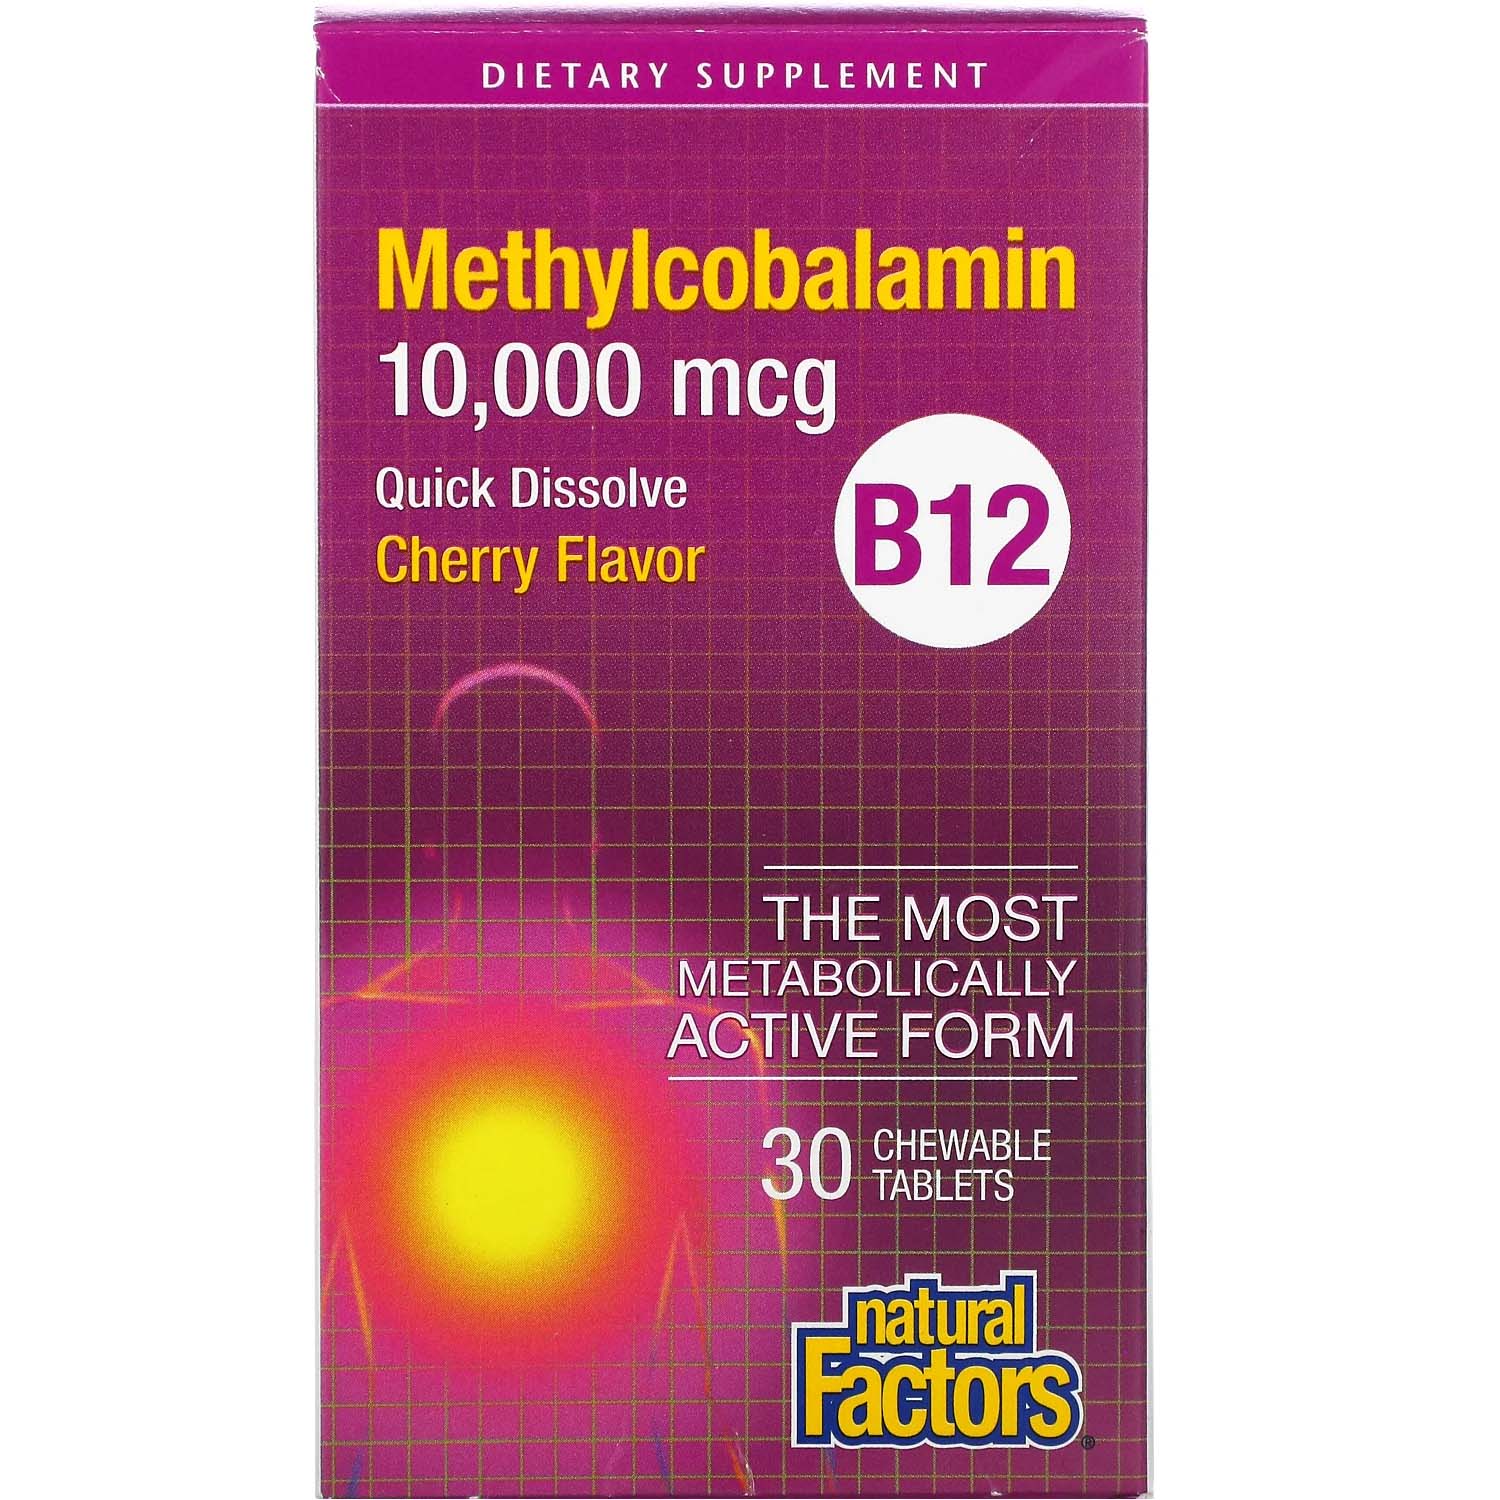 Natural Factors B12 Methylcobalamin 30 Chewable Tablets 10000 mcg